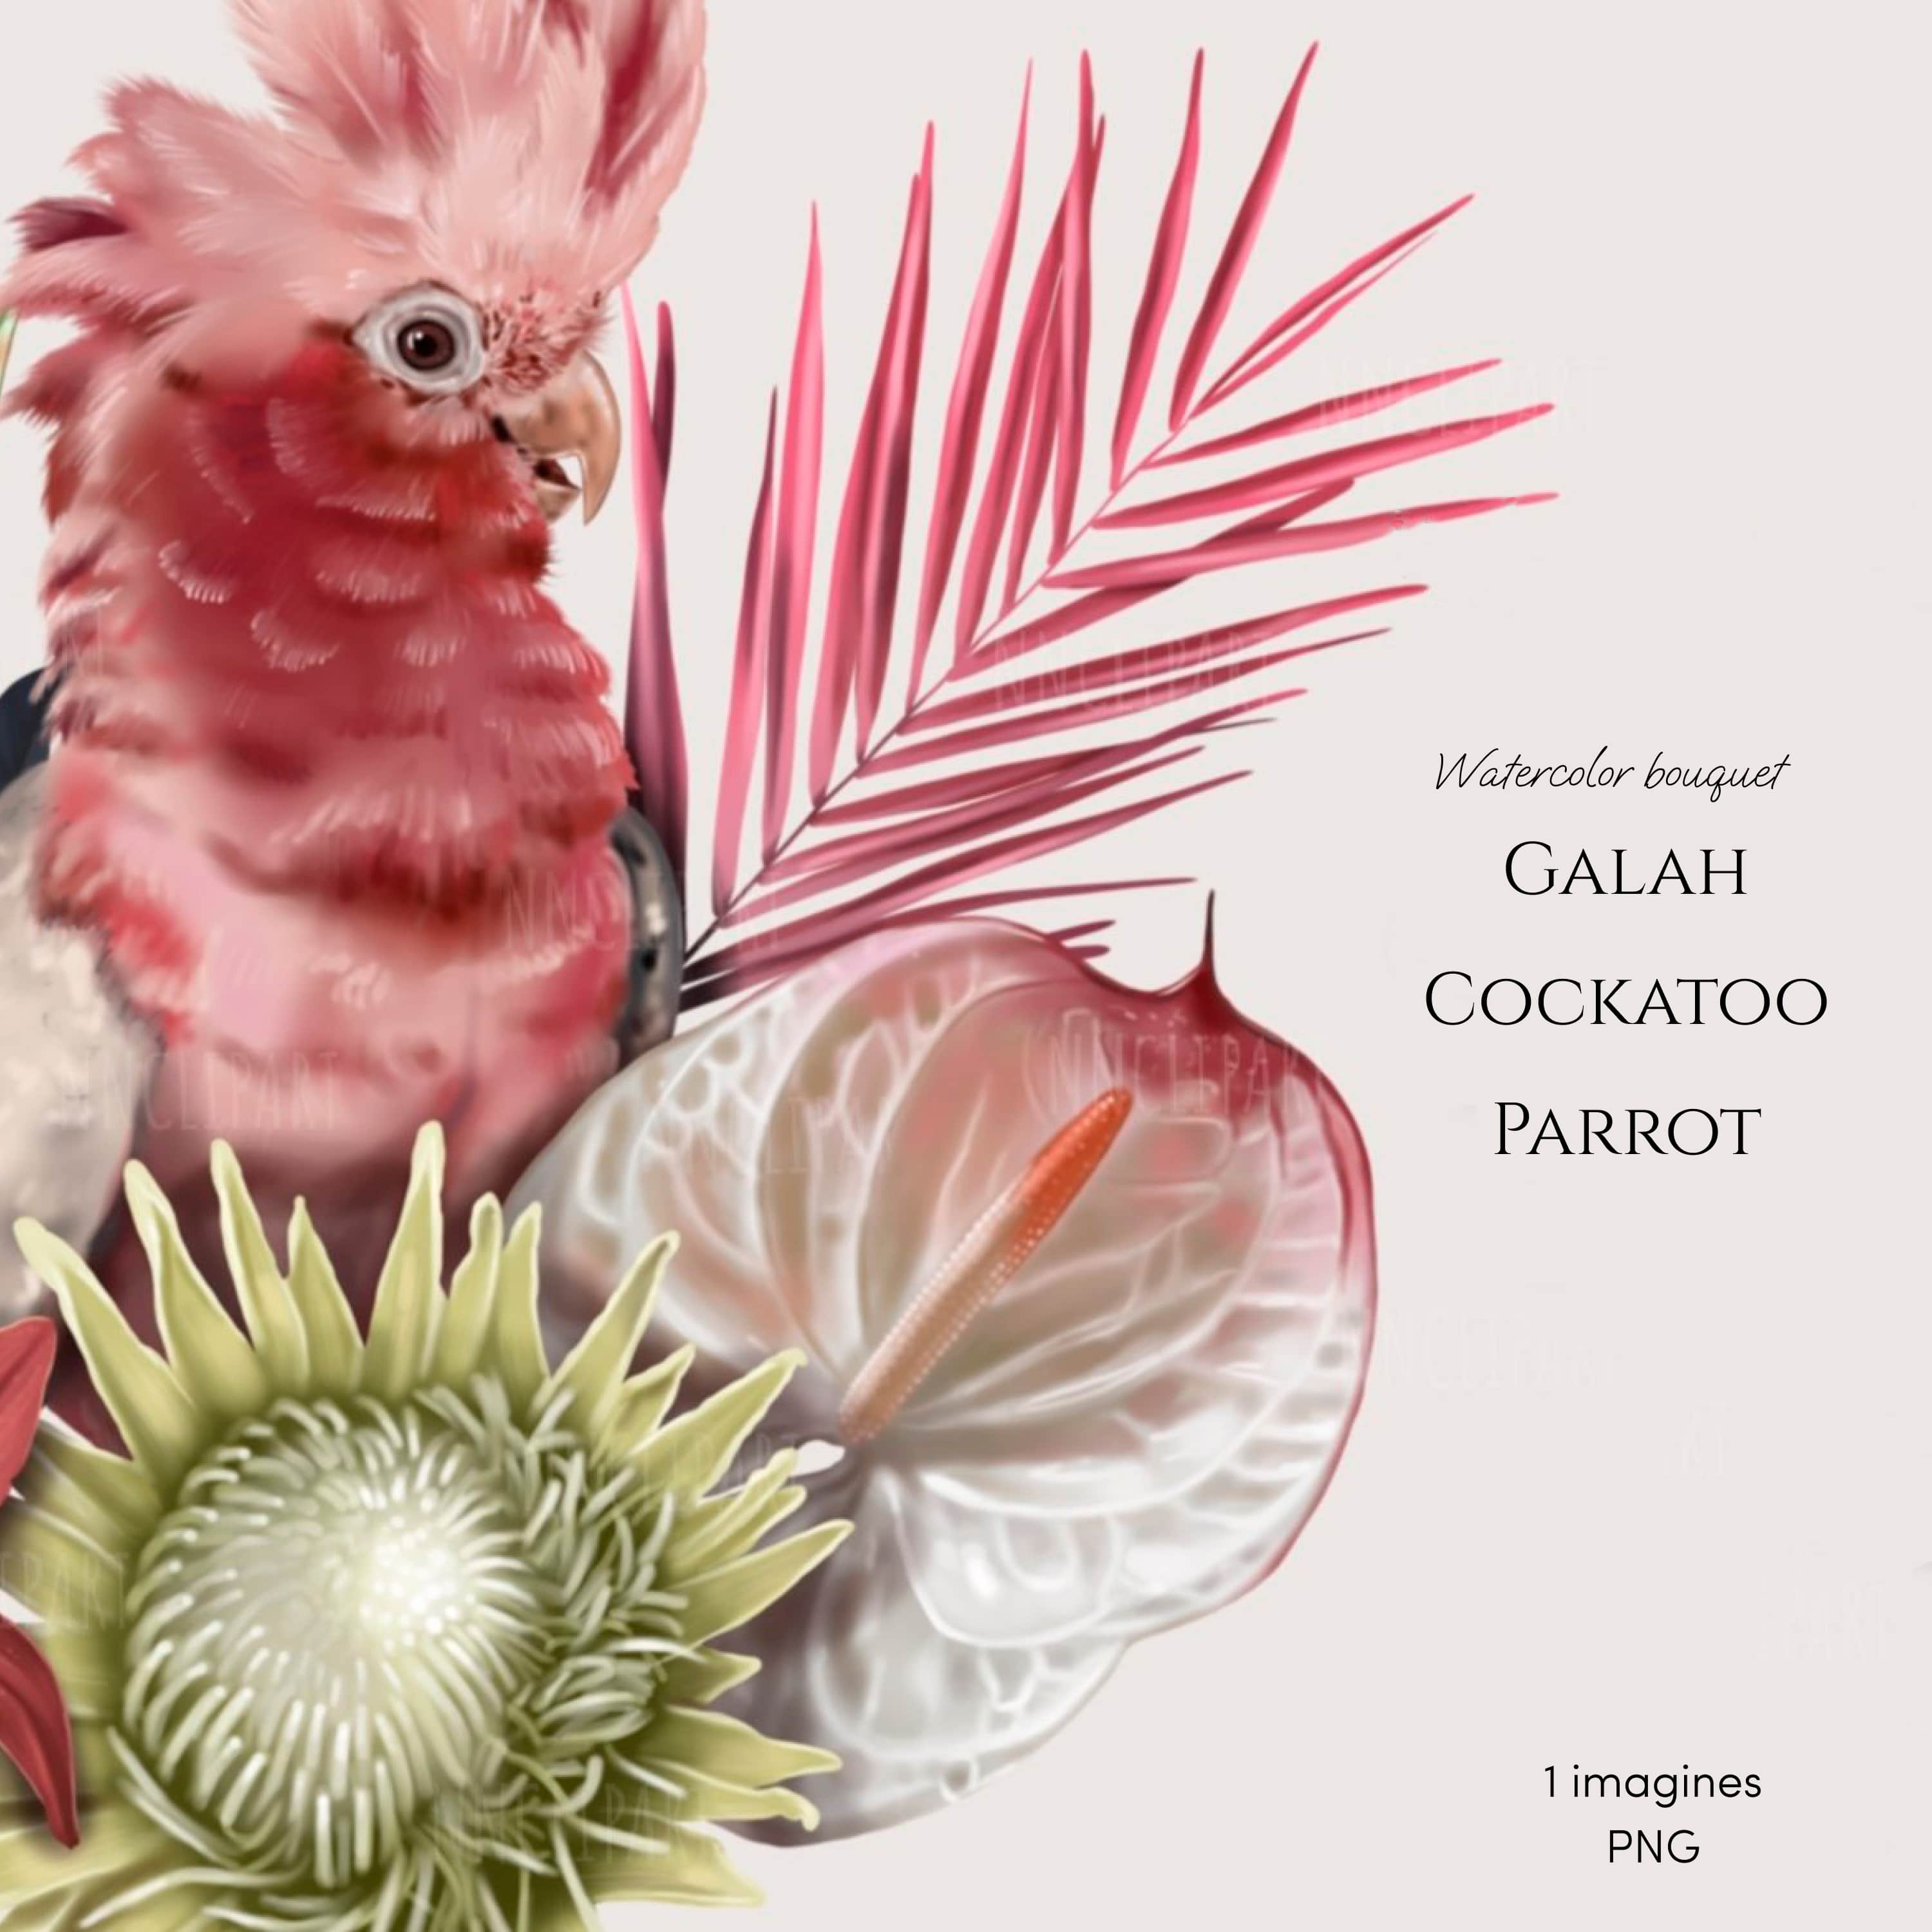 Galah cockatoo Parrot, Watercolor bouquet clipart cover.